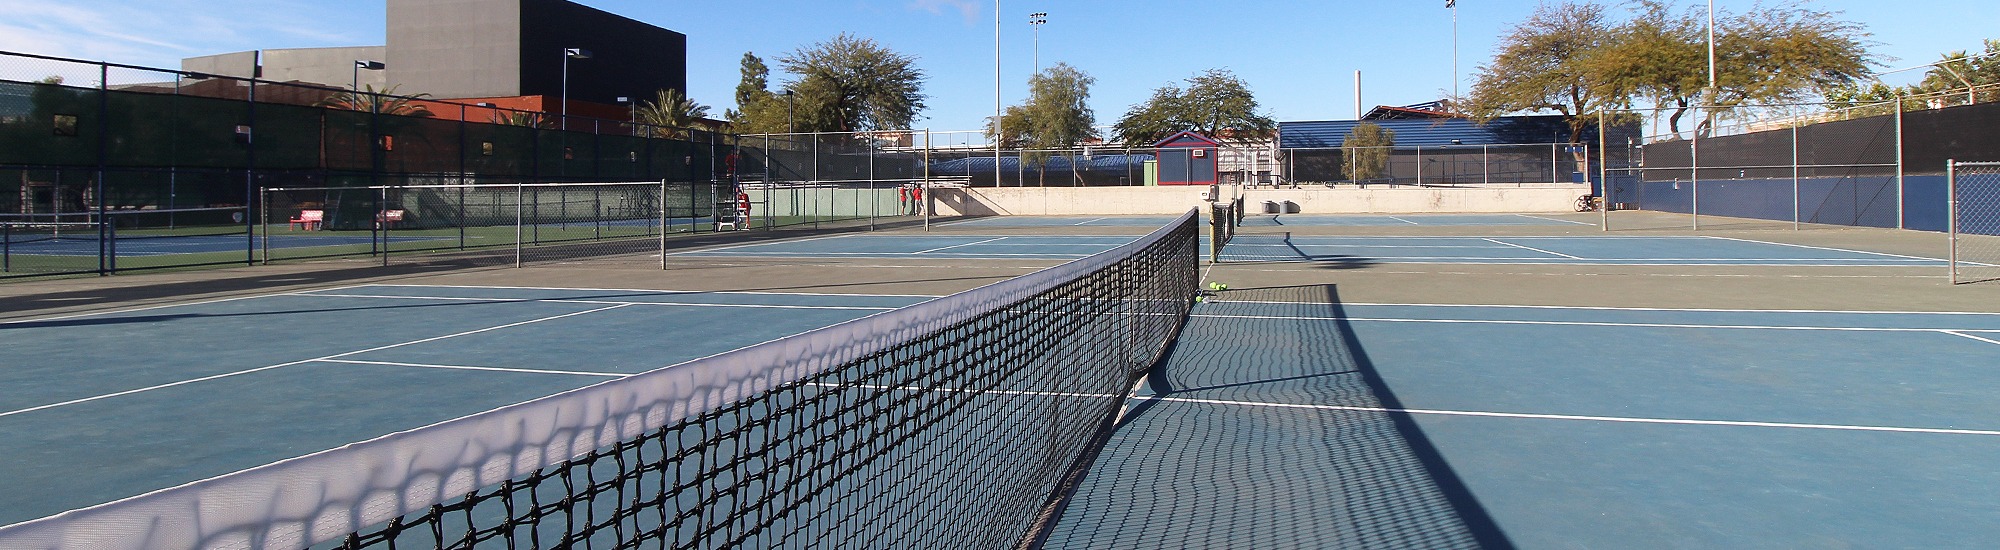 Tennis courts at Robson Tennis Court, UArizona